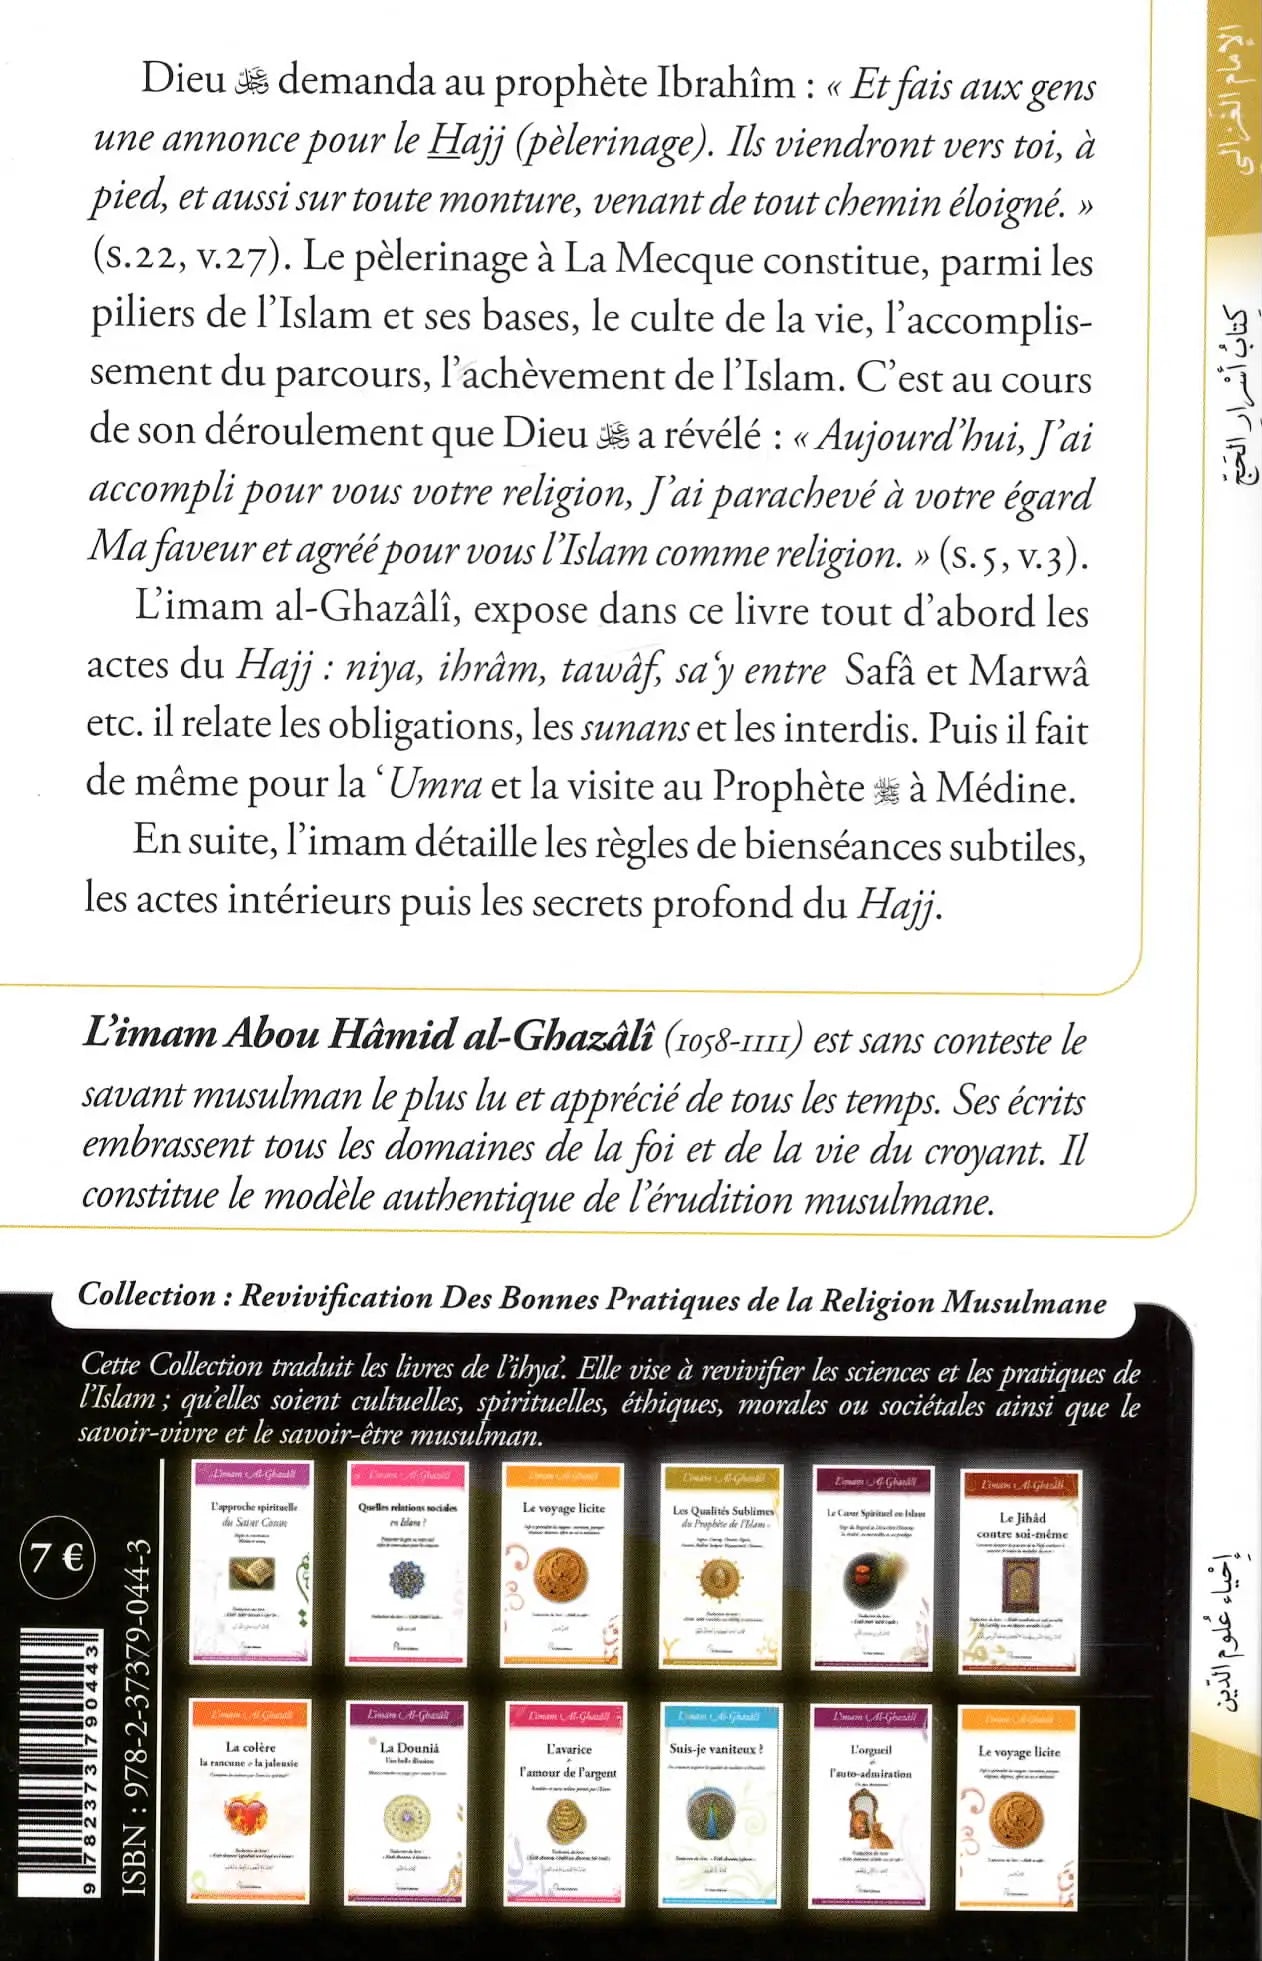 Les Secrets du Pèlerinage d'Abu Hamid Al-Ghazali - Verso